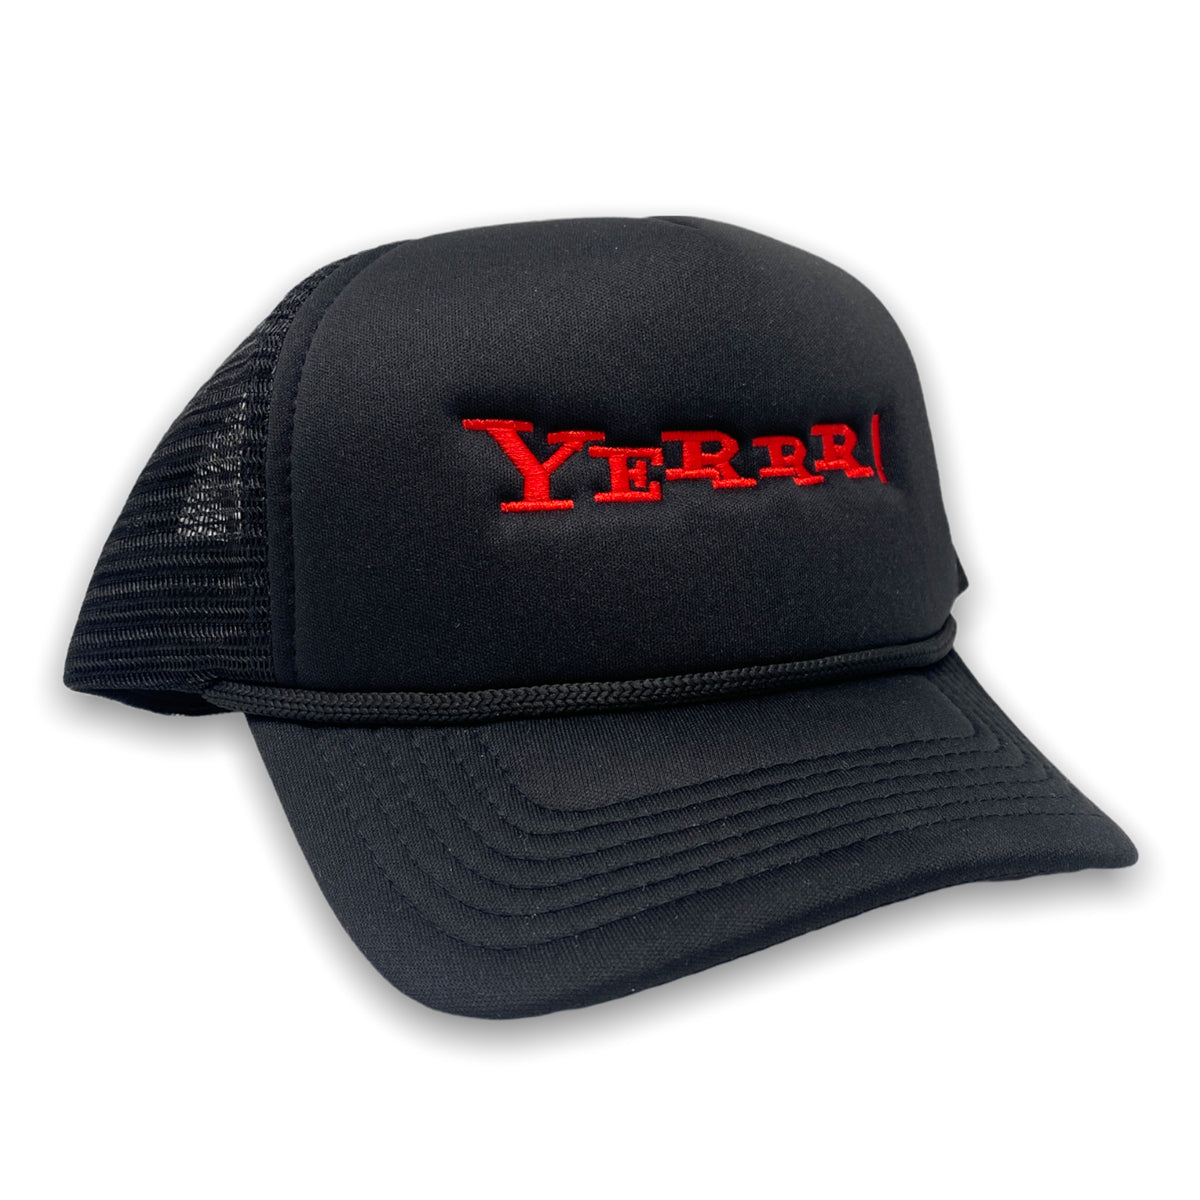 Yerrrhoo! Trucker Hat (Black)